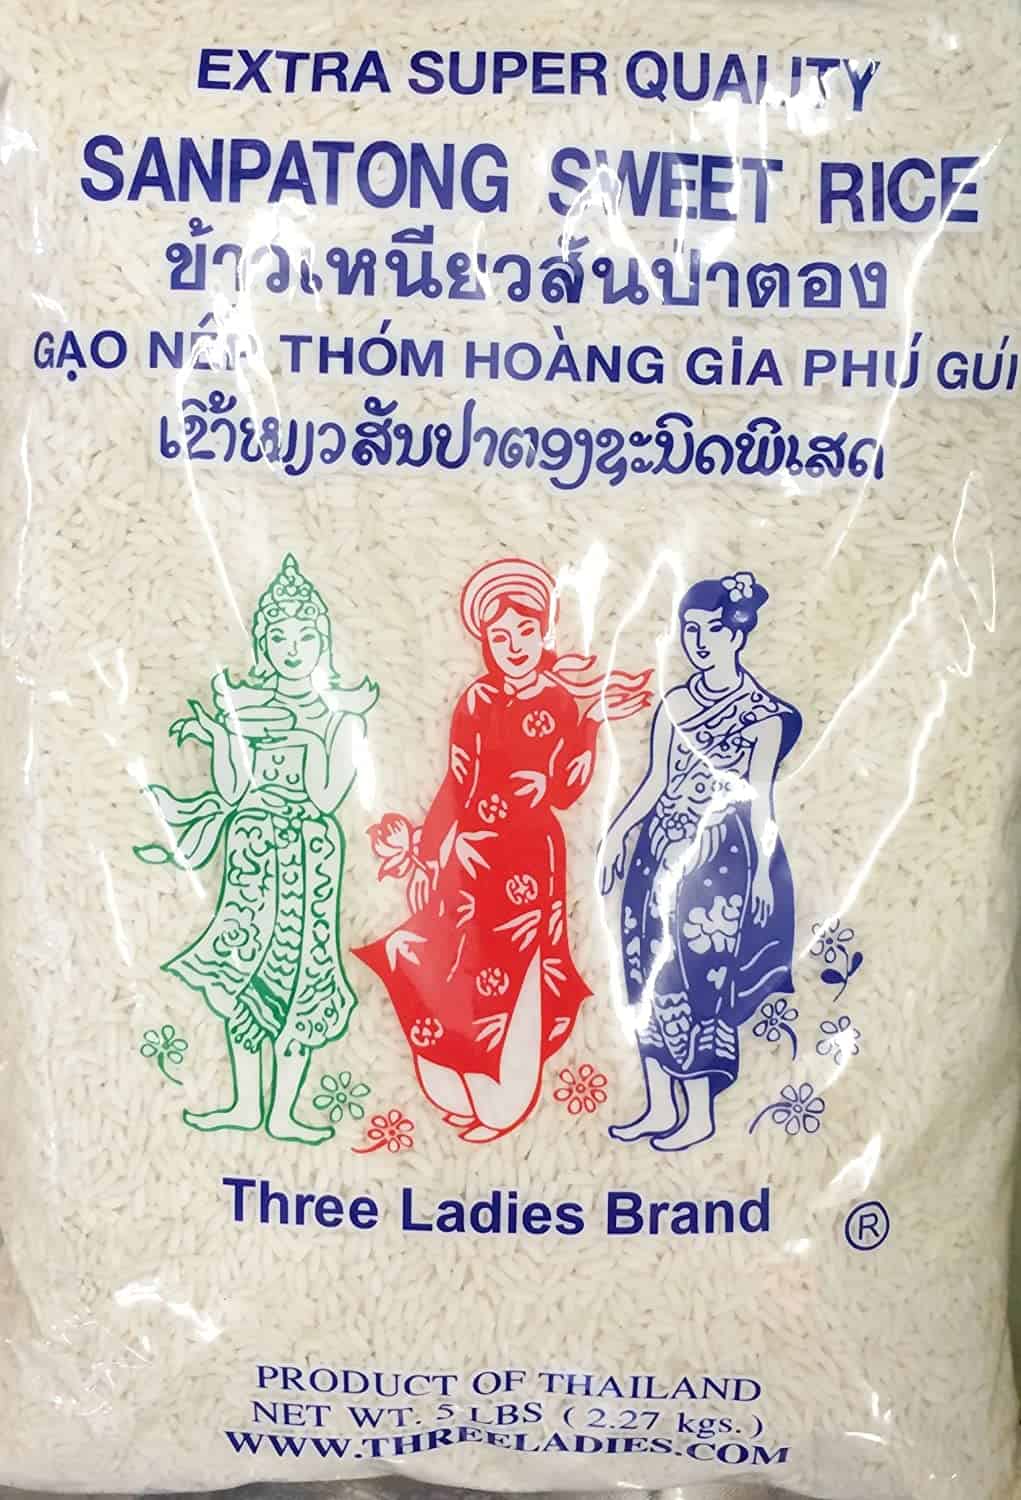 Meilleur riz à grains longs : Three Ladies Brand Sanpatong Sweet Rice